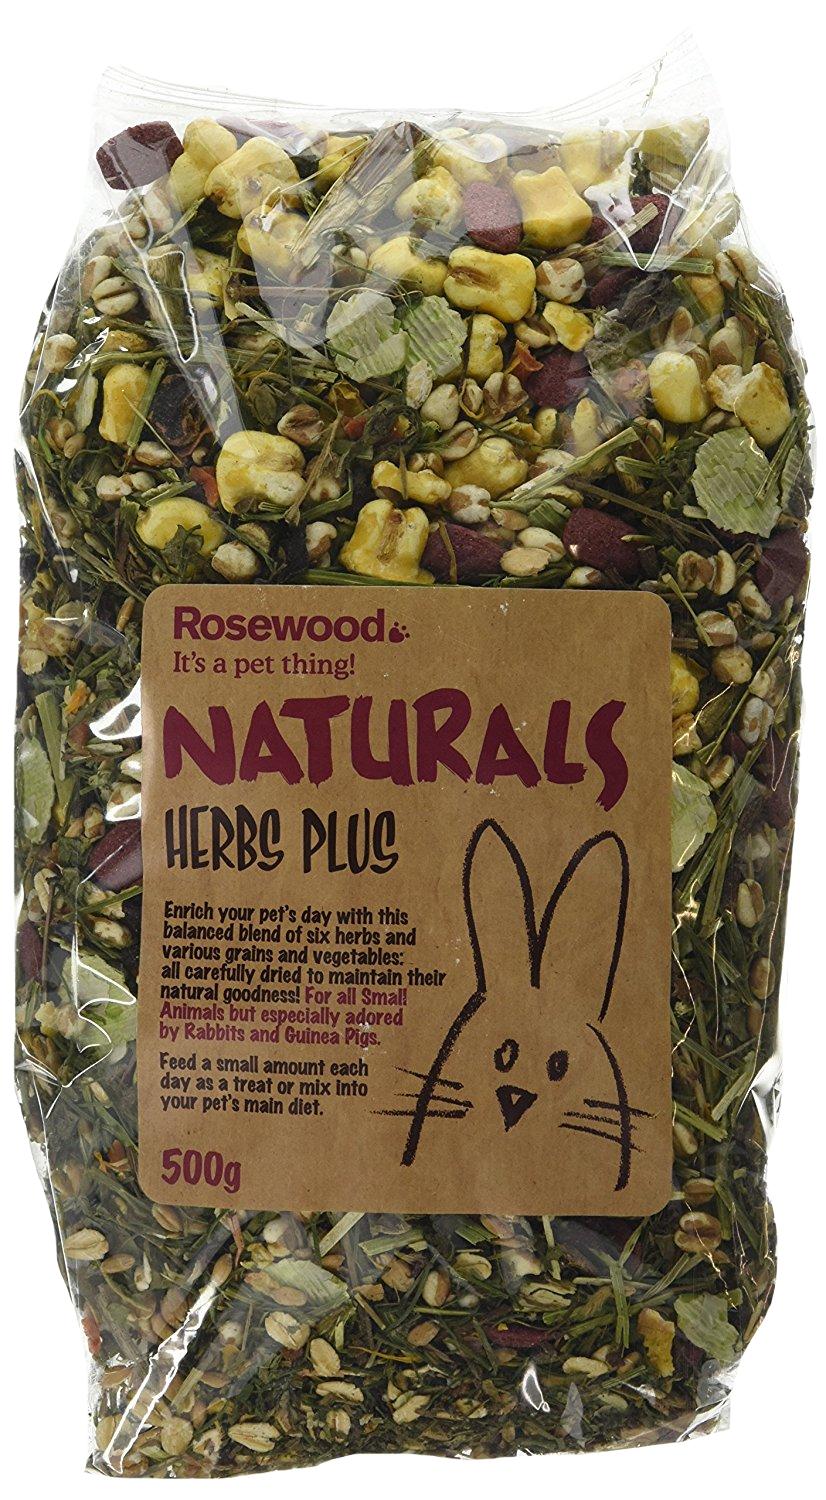 Naturals Herbs Plus